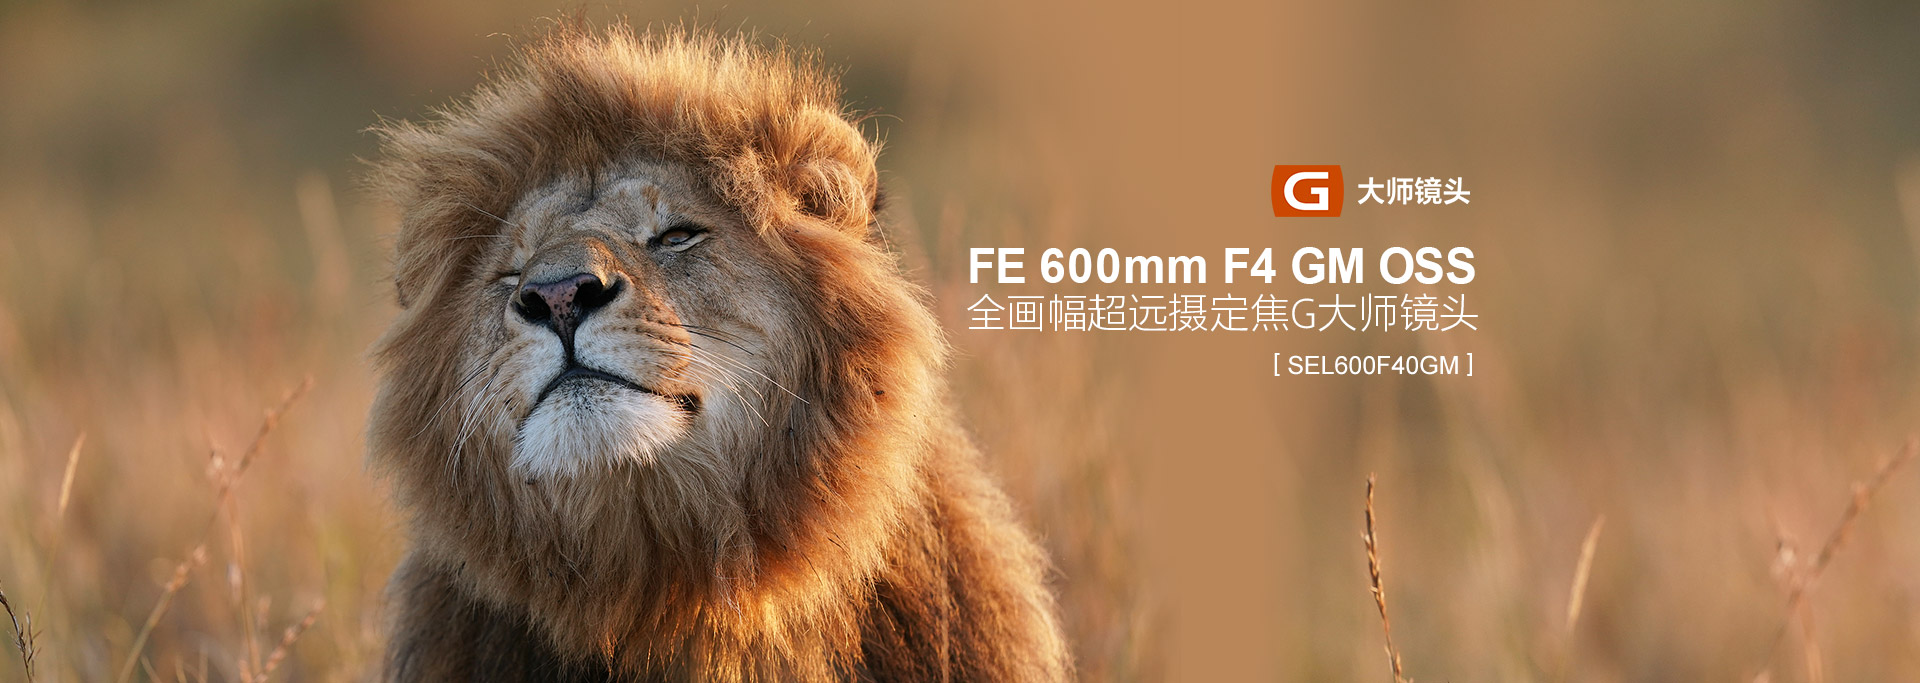 FE 600mm F4 GM OSS 全画幅超远摄定焦G大师镜头(SEL600F40GM)